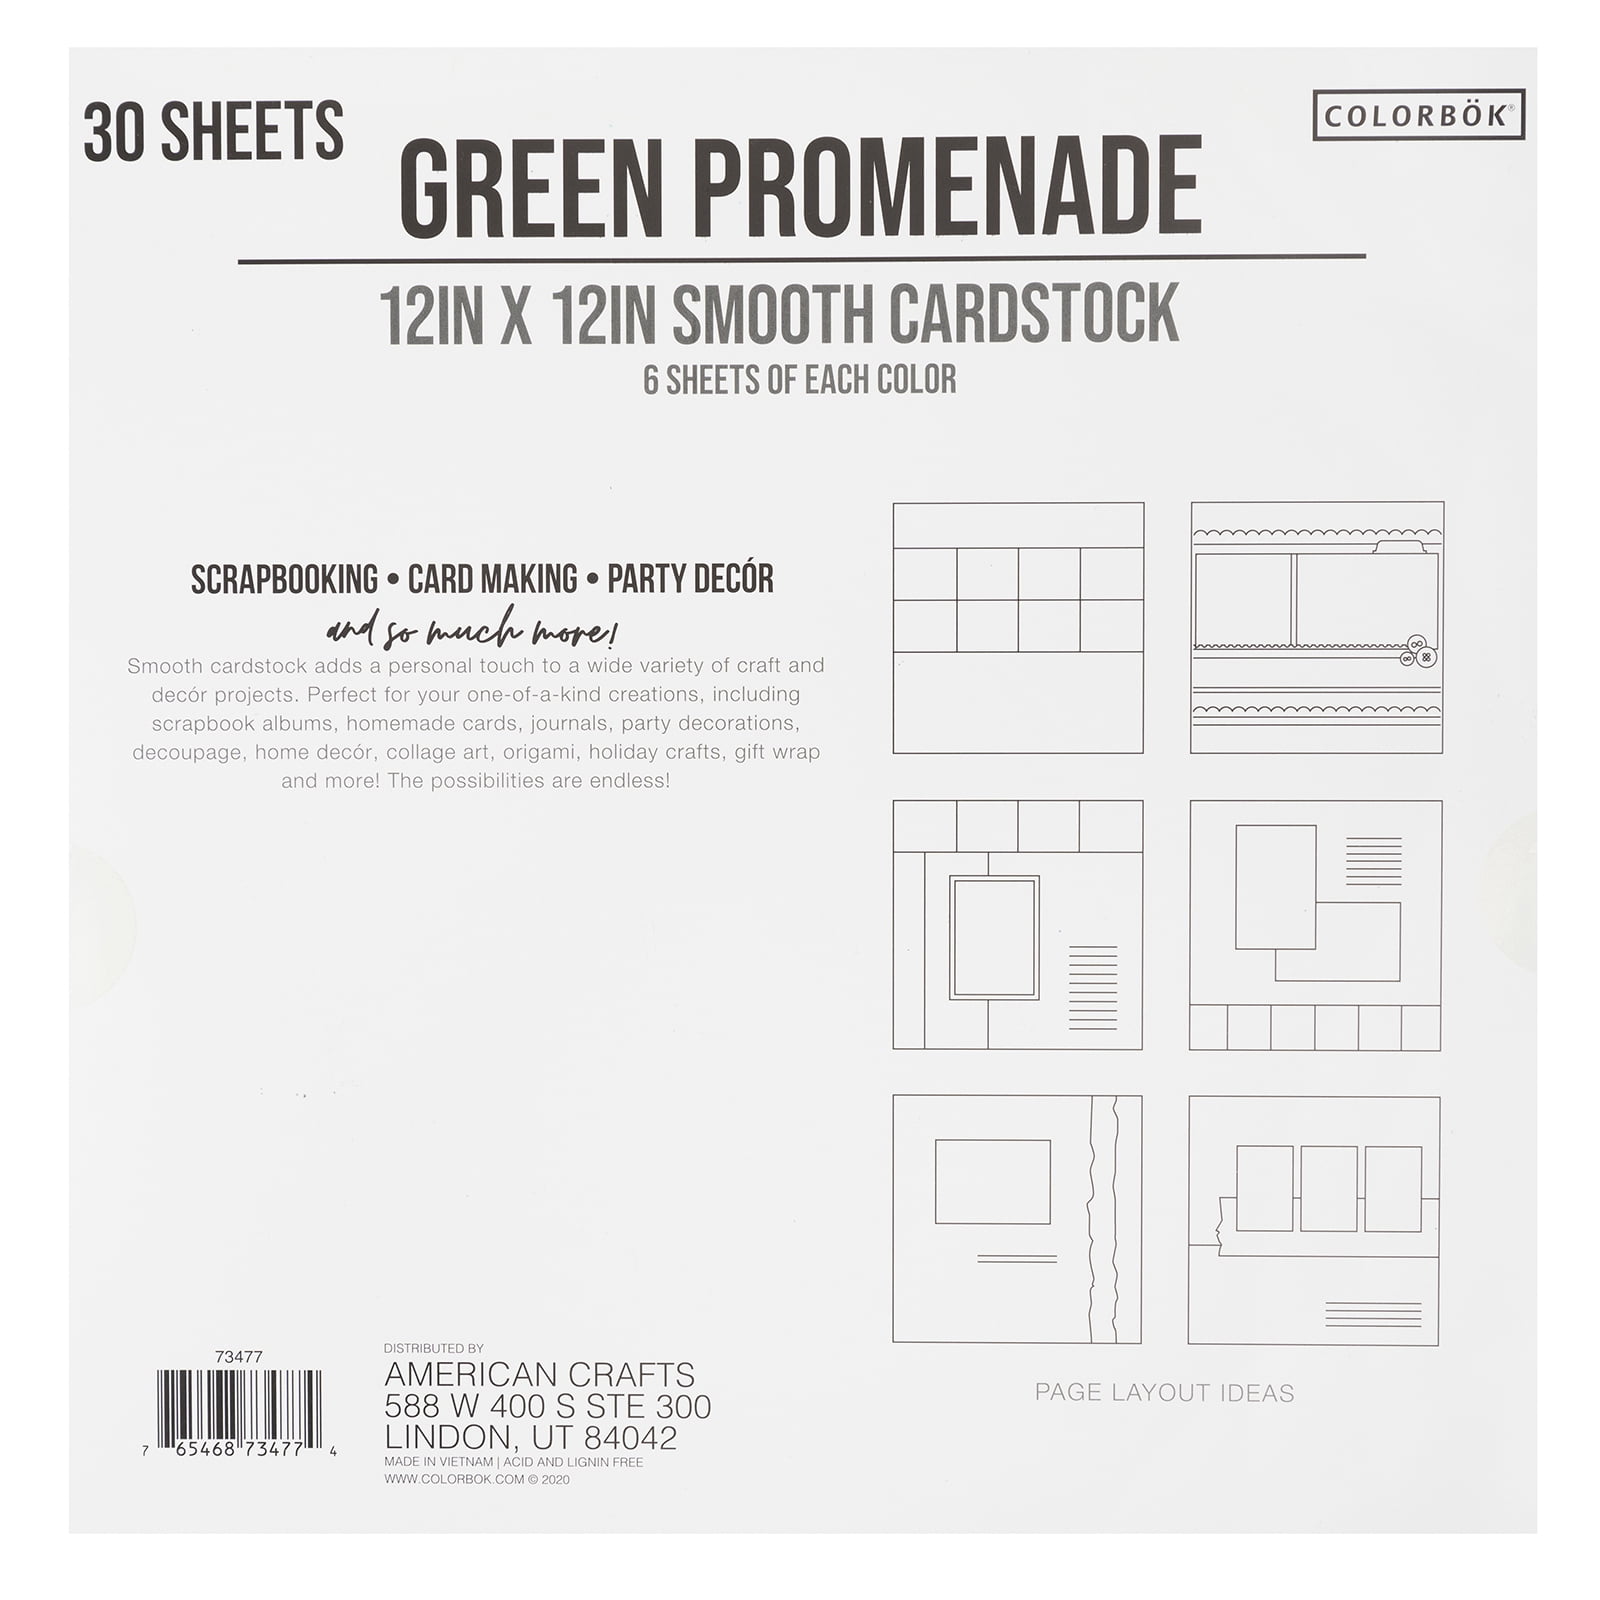 ColorBok 73477B Smooth Cardstock Paper Pad Green Promenade 12 x 12 Fоur Расk 